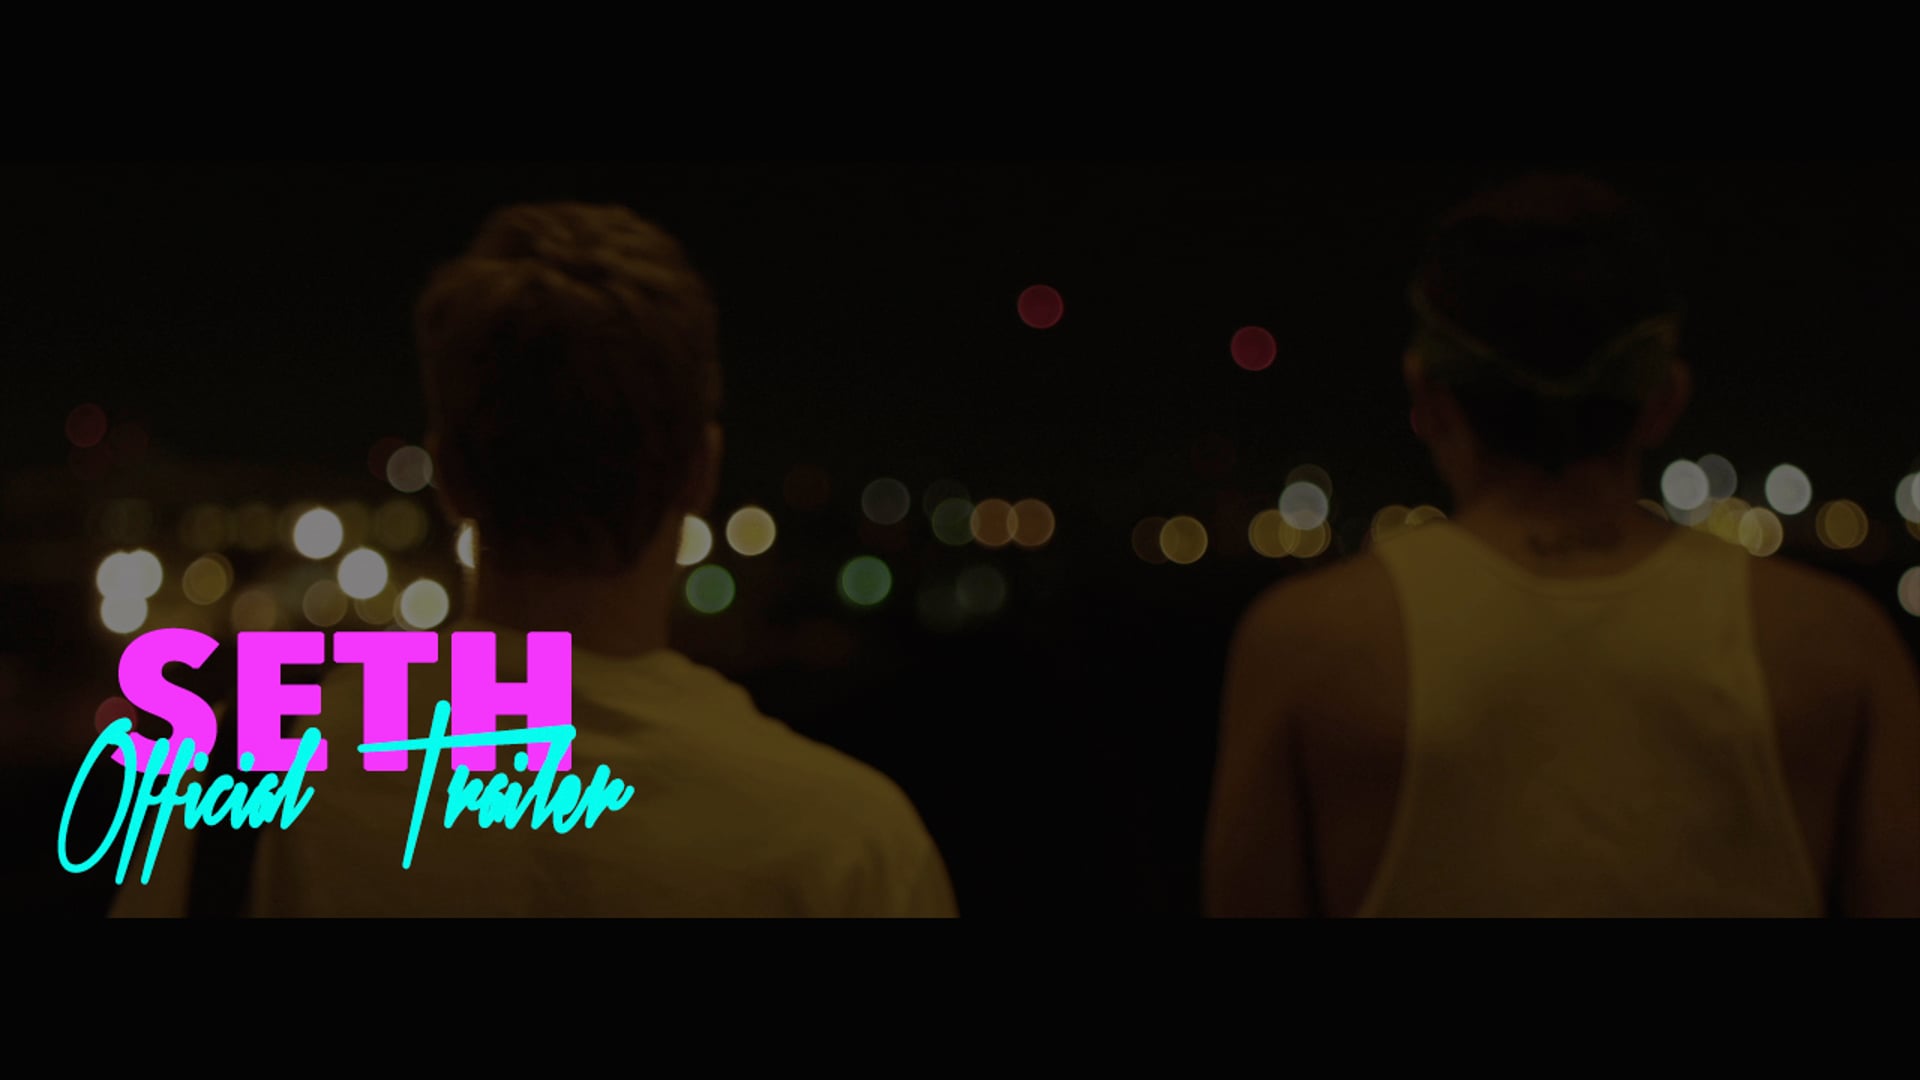 SETH - Official Trailer